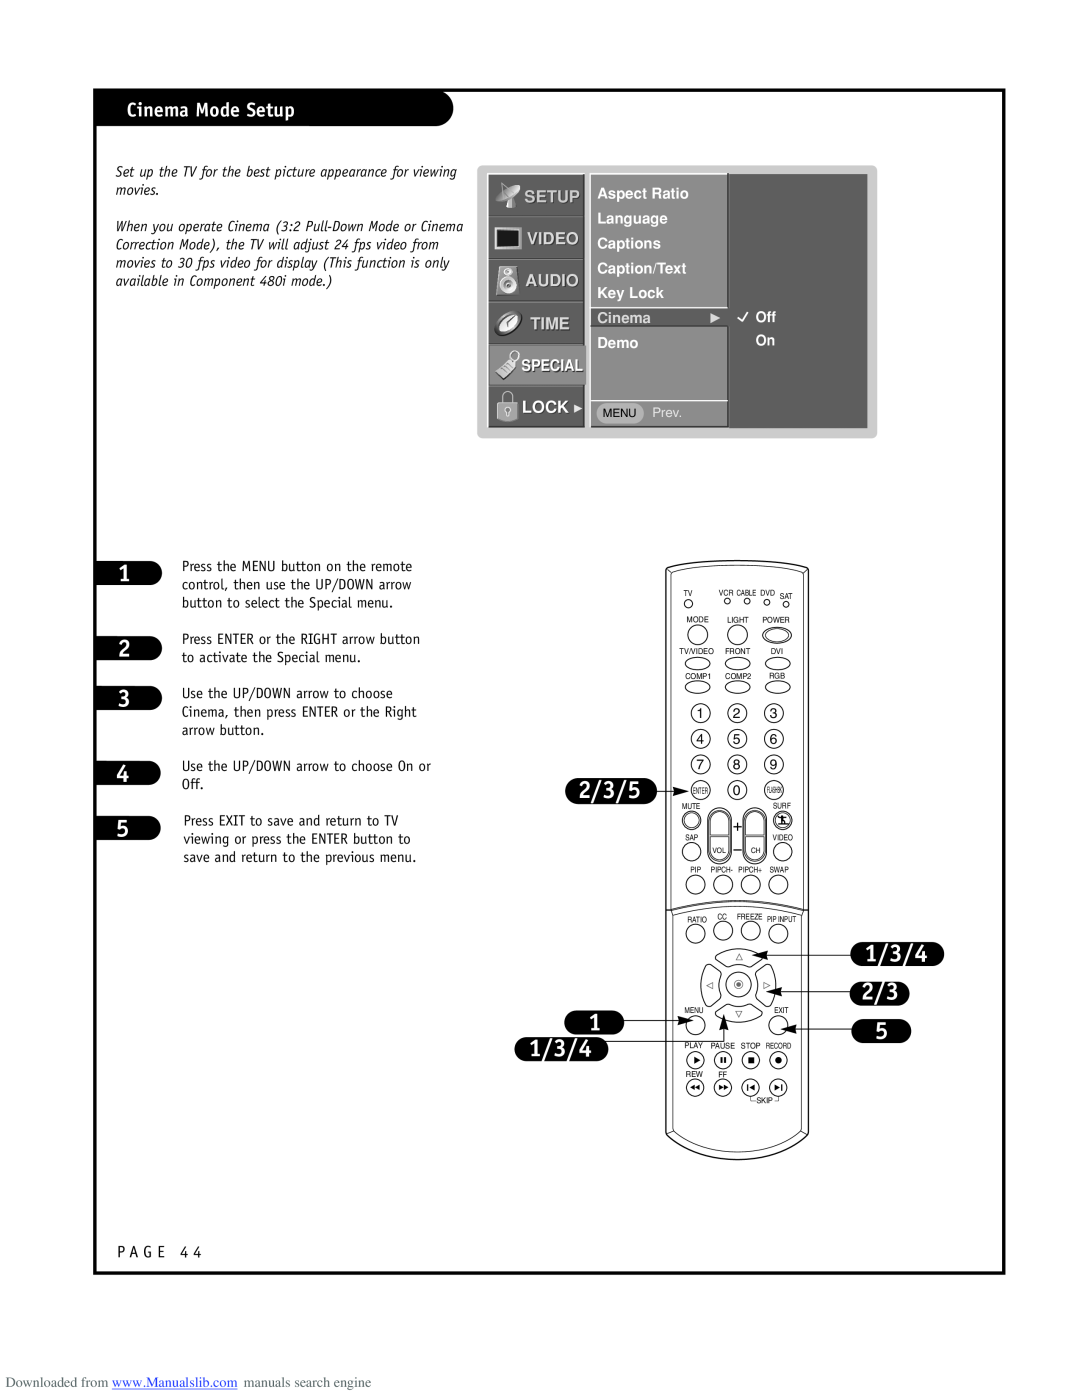 LG Electronics RU-52SZ53D Cinema Mode Setup, 2/3/5, 1/3/4 2/3, Audio Time, Lock G, Video, Special, Cinema G, Demo, Off On 